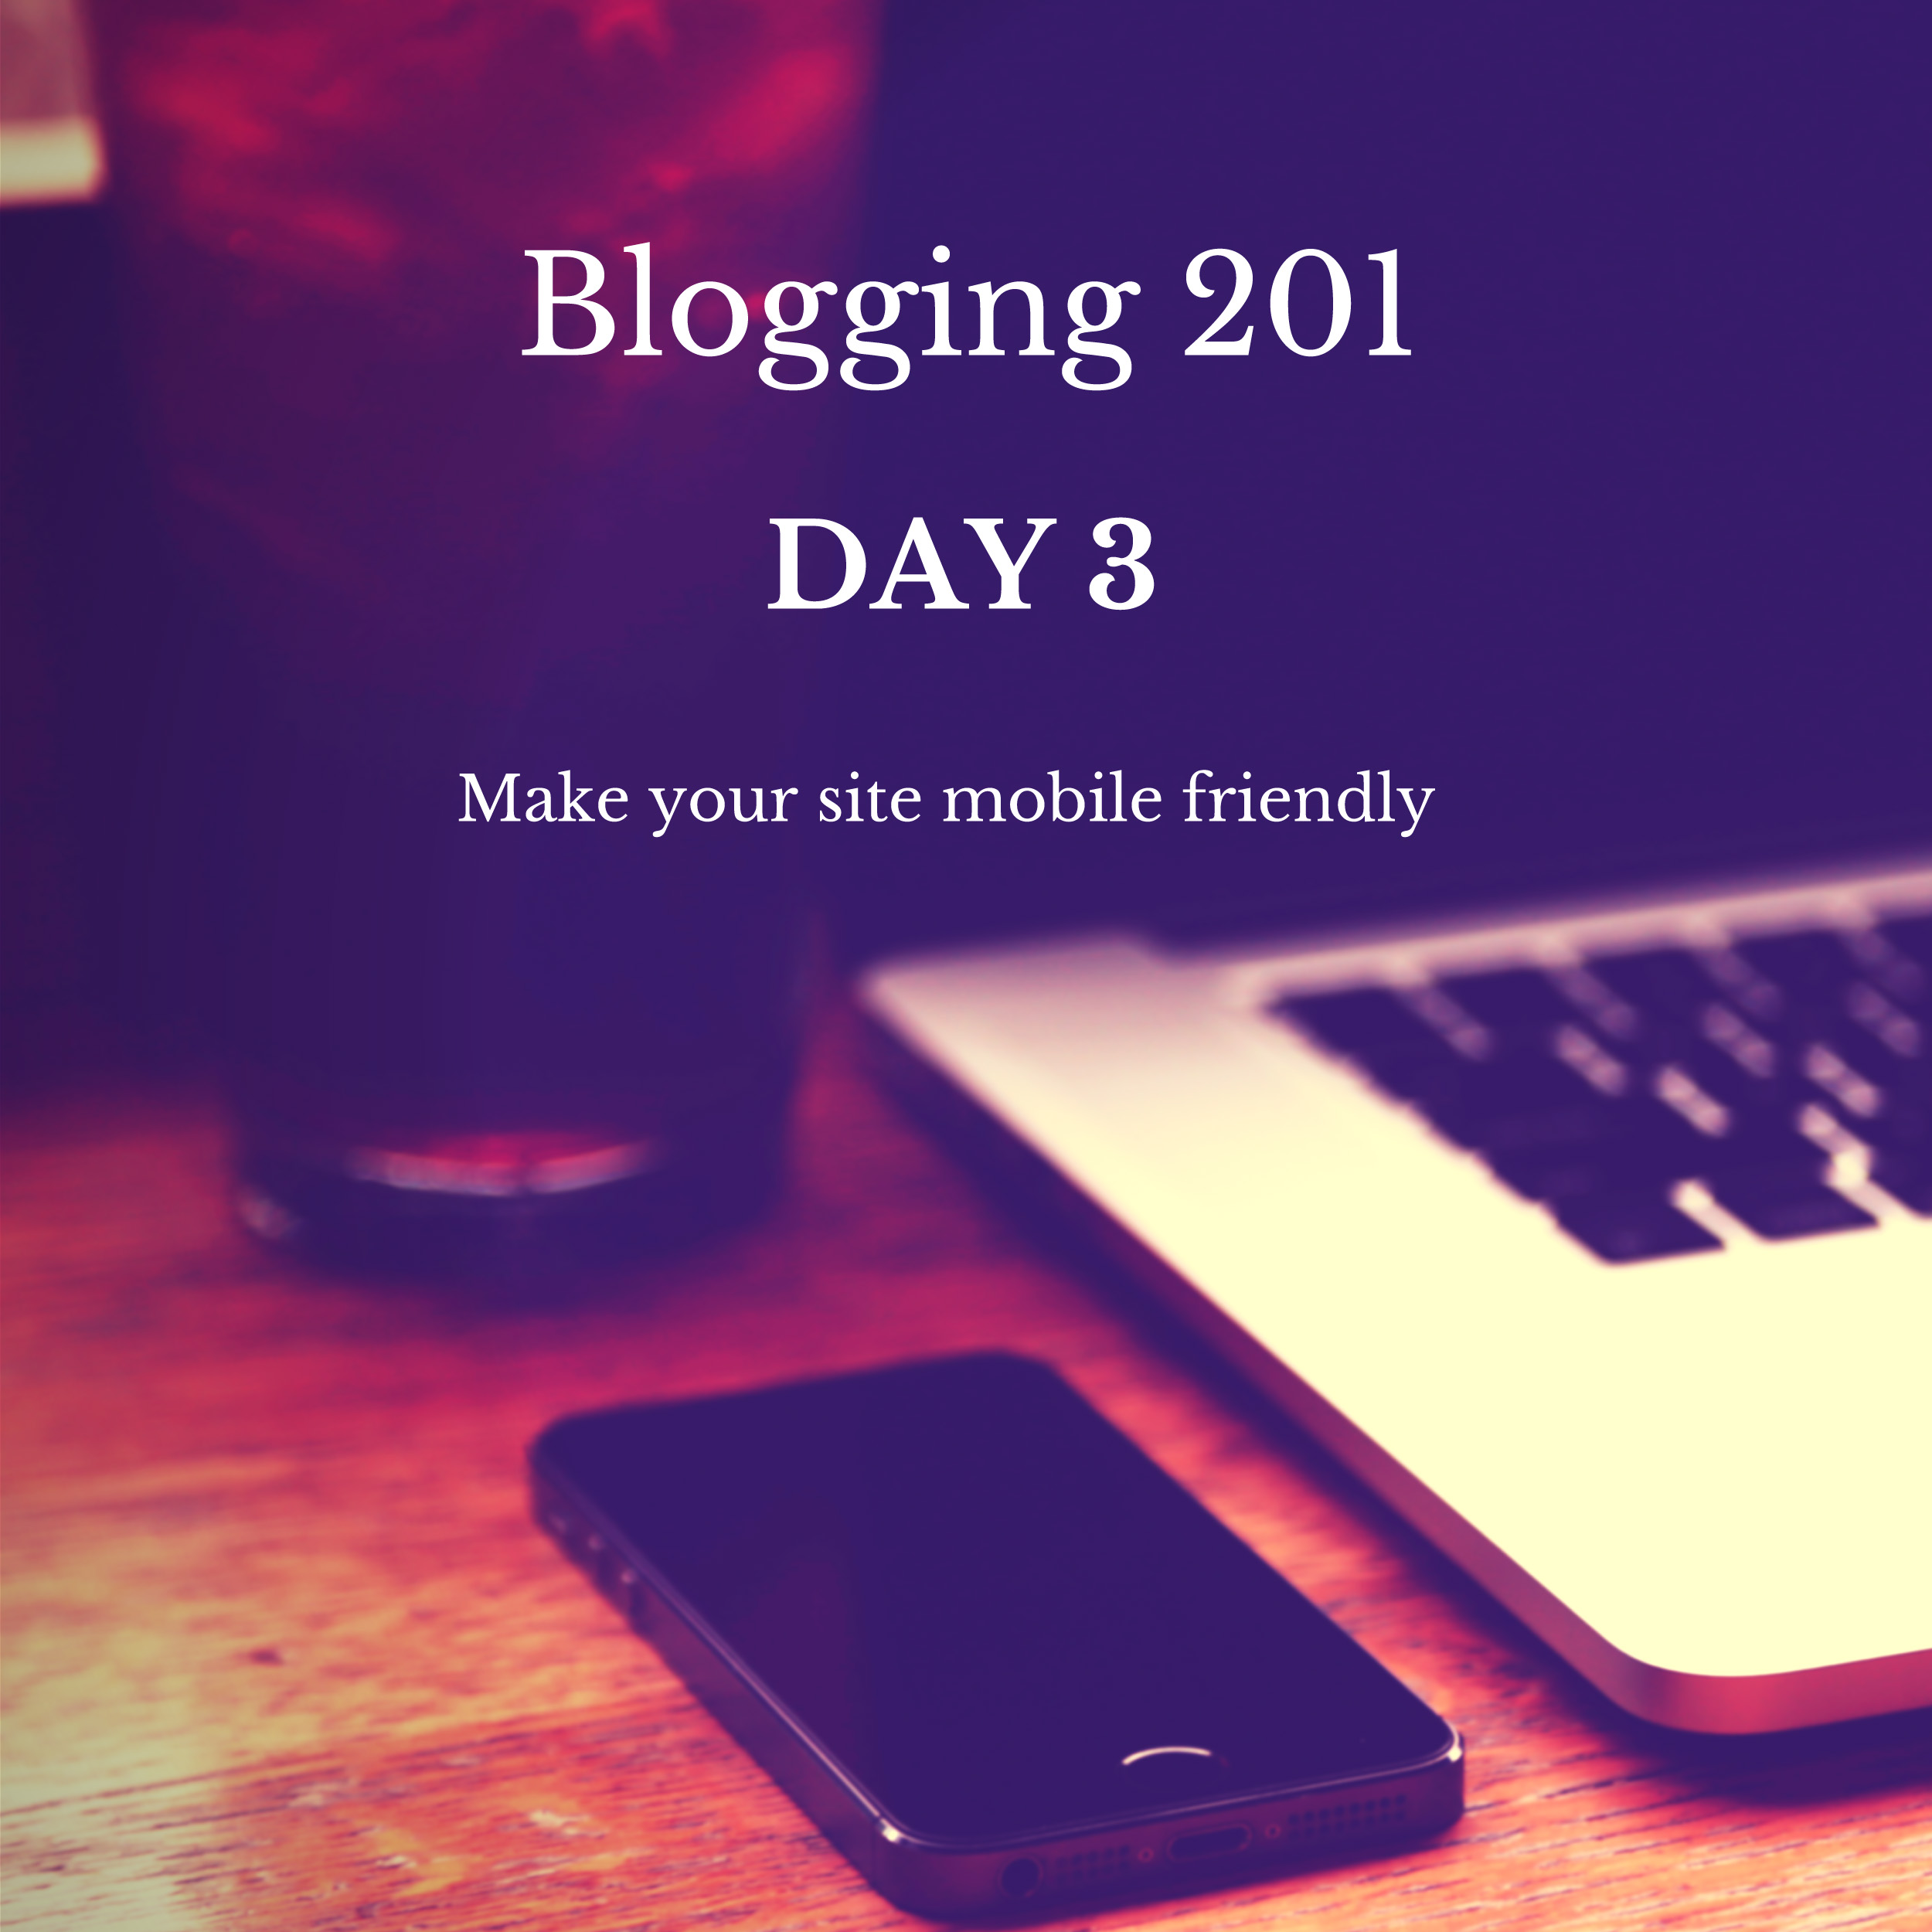 Blogging 201 - Day 3